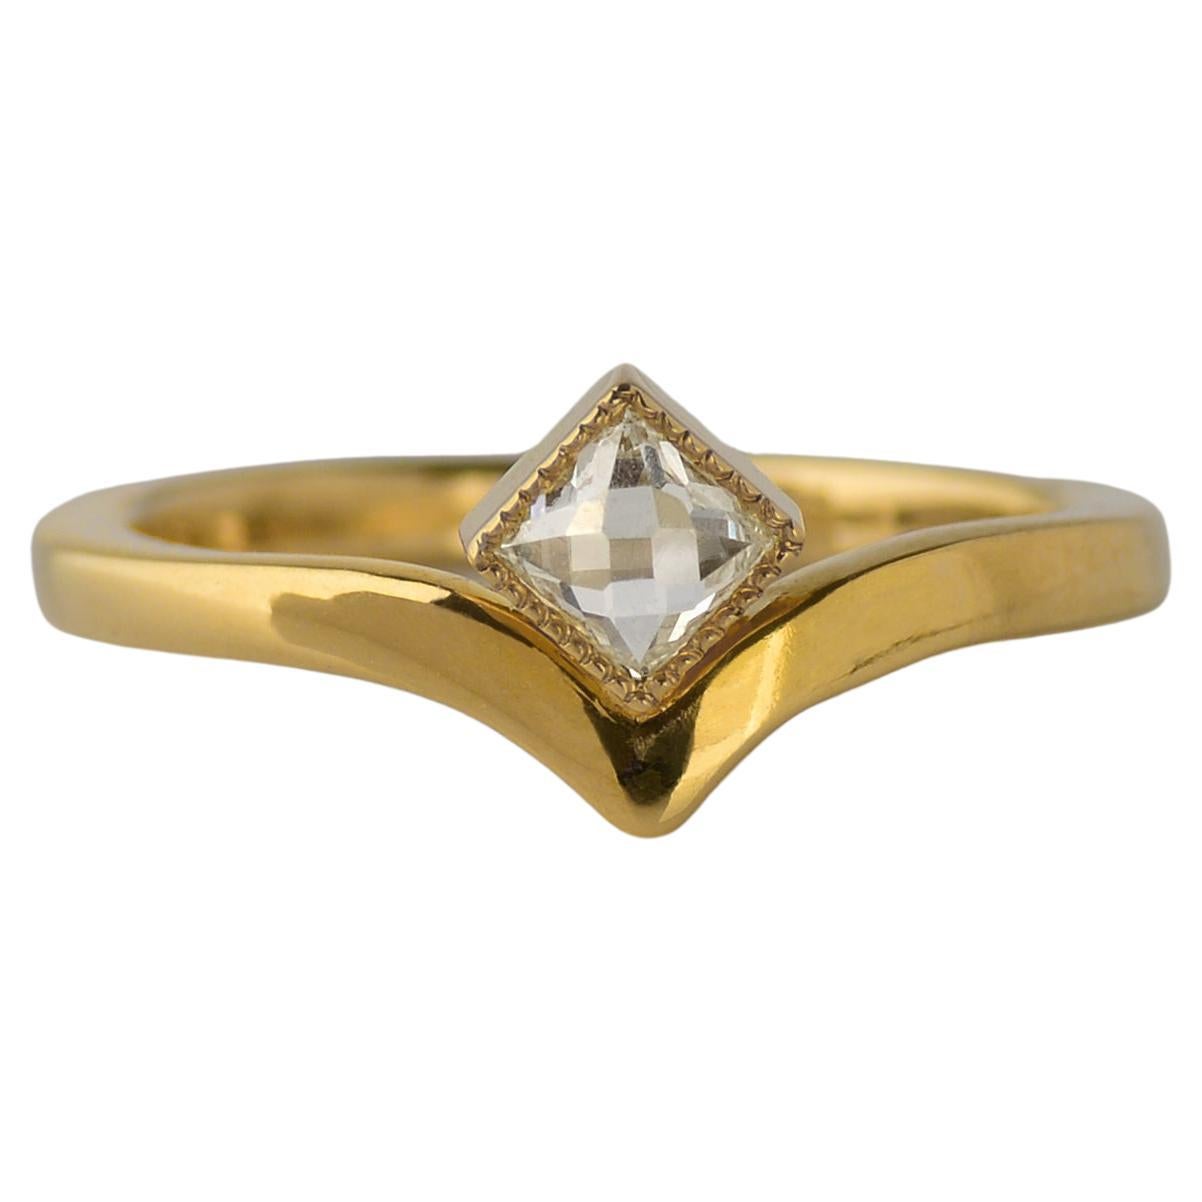 Susan Crow Studio Lilly Victory Rose Nouveau Cut Diamond Ring 